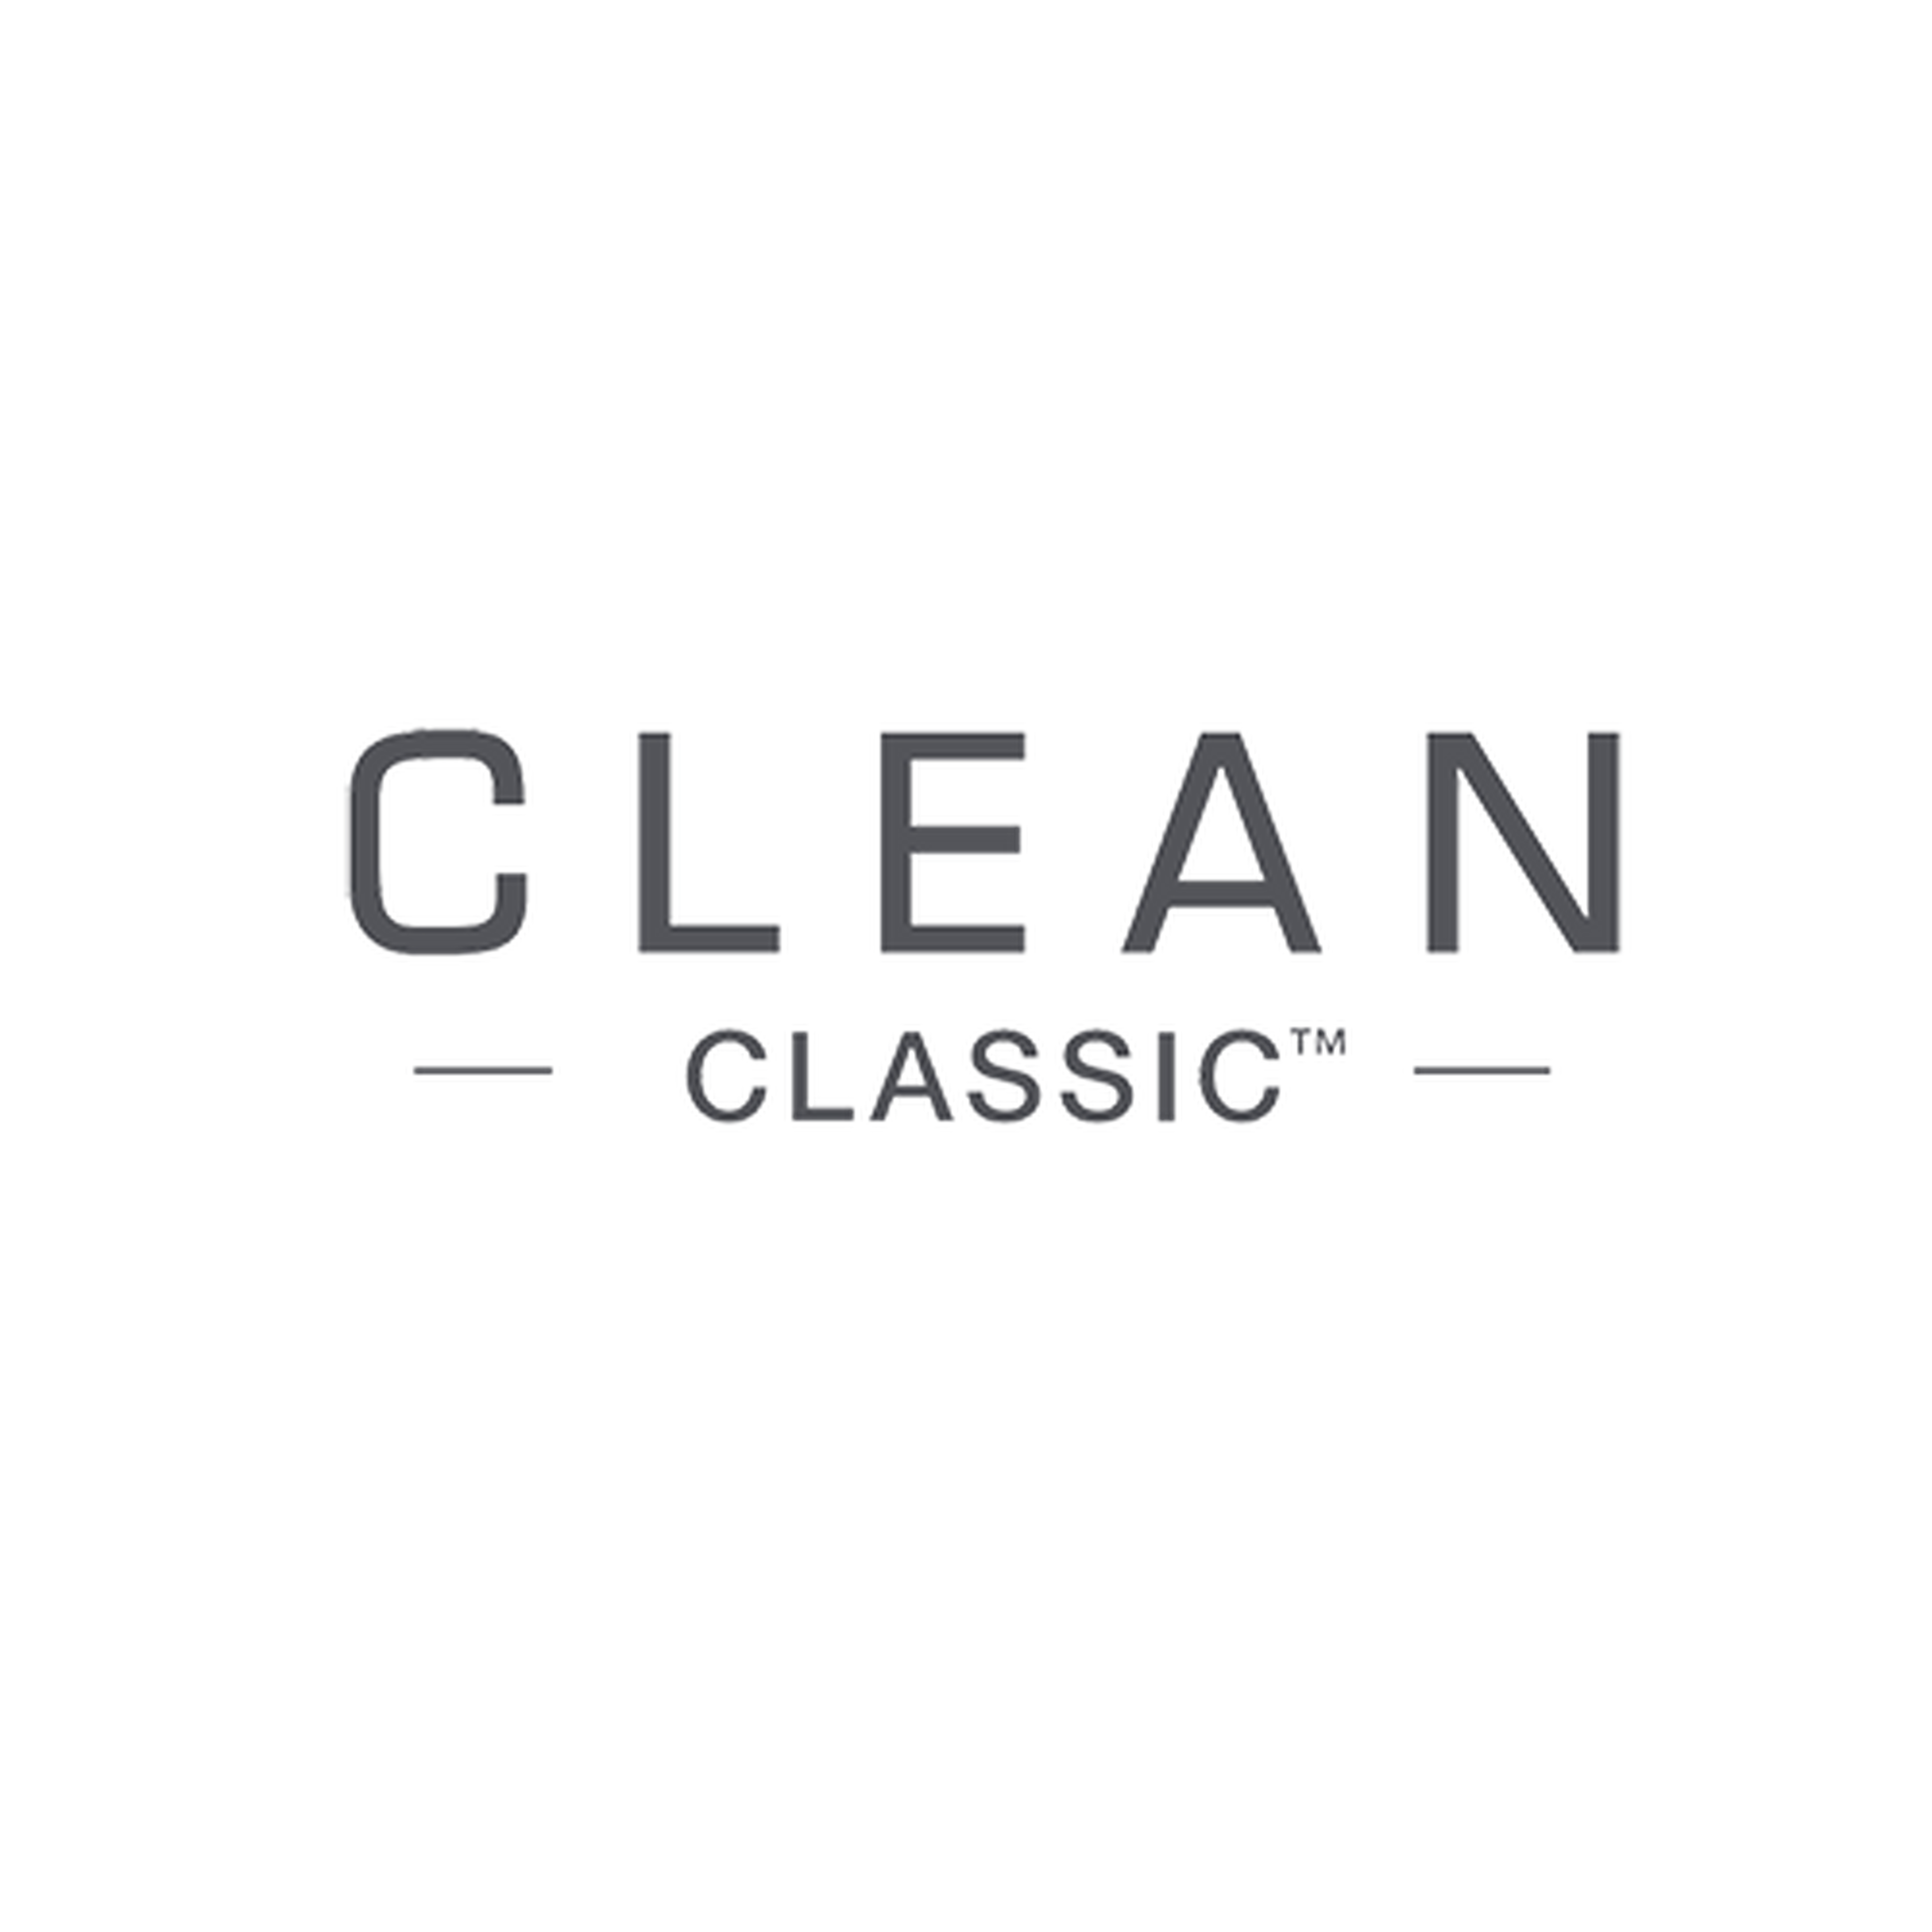 Clean logotype